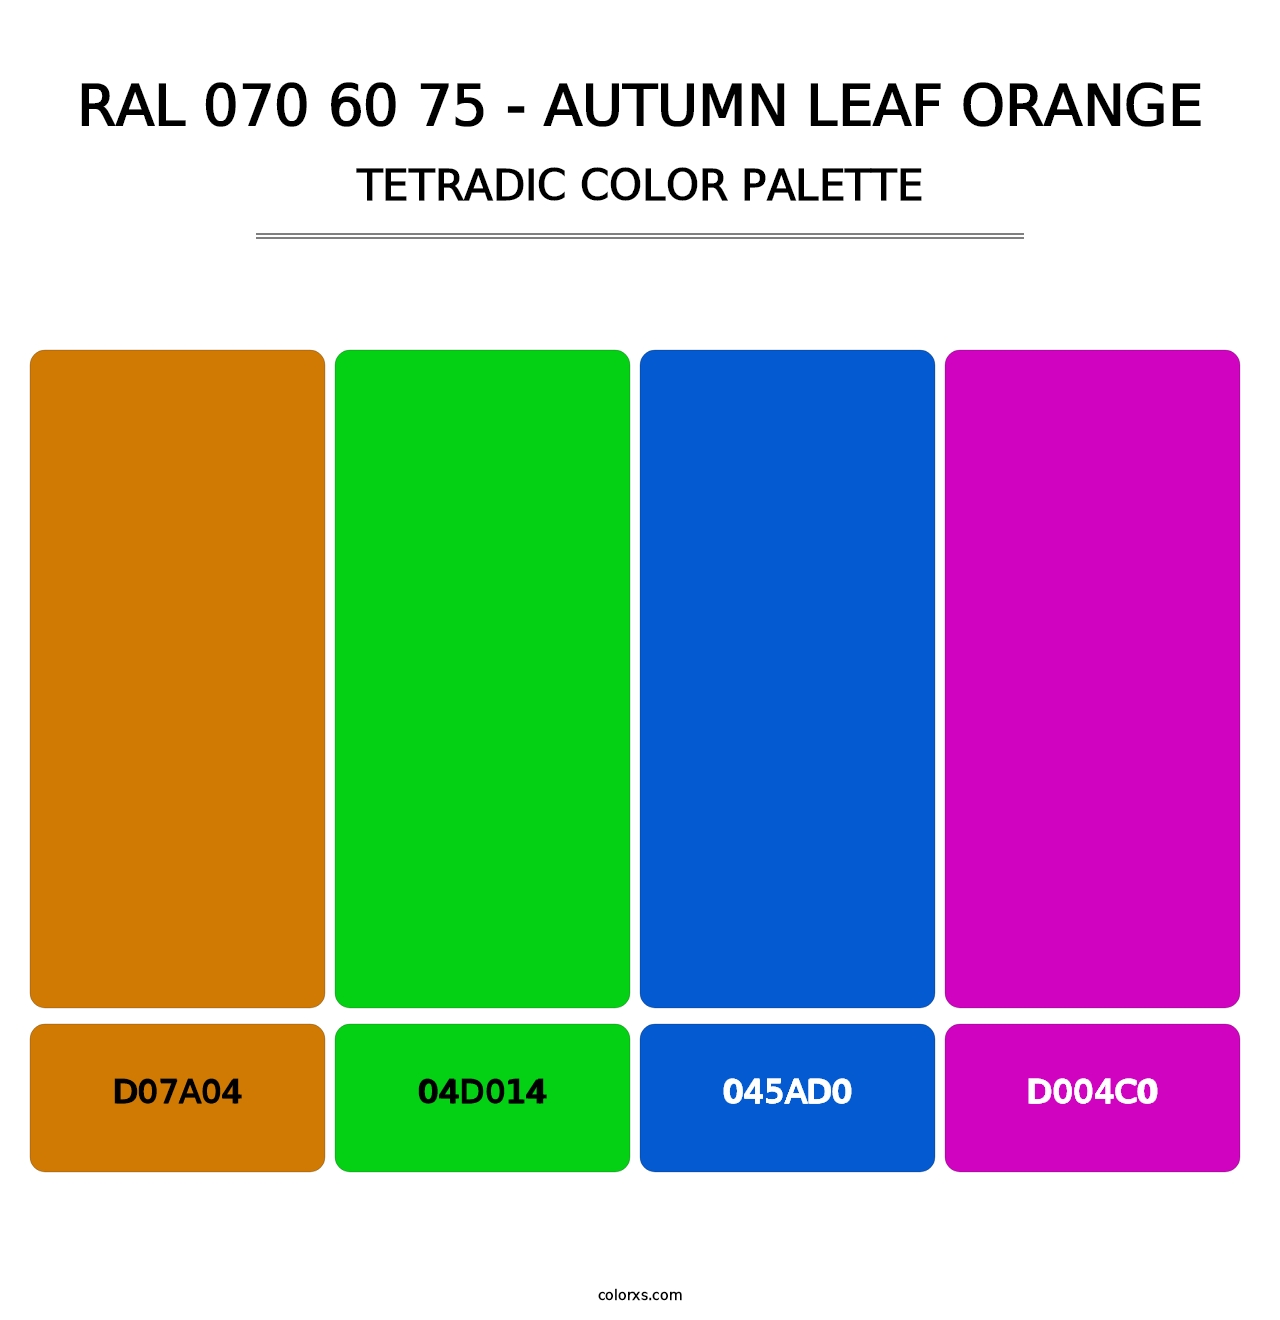 RAL 070 60 75 - Autumn Leaf Orange - Tetradic Color Palette